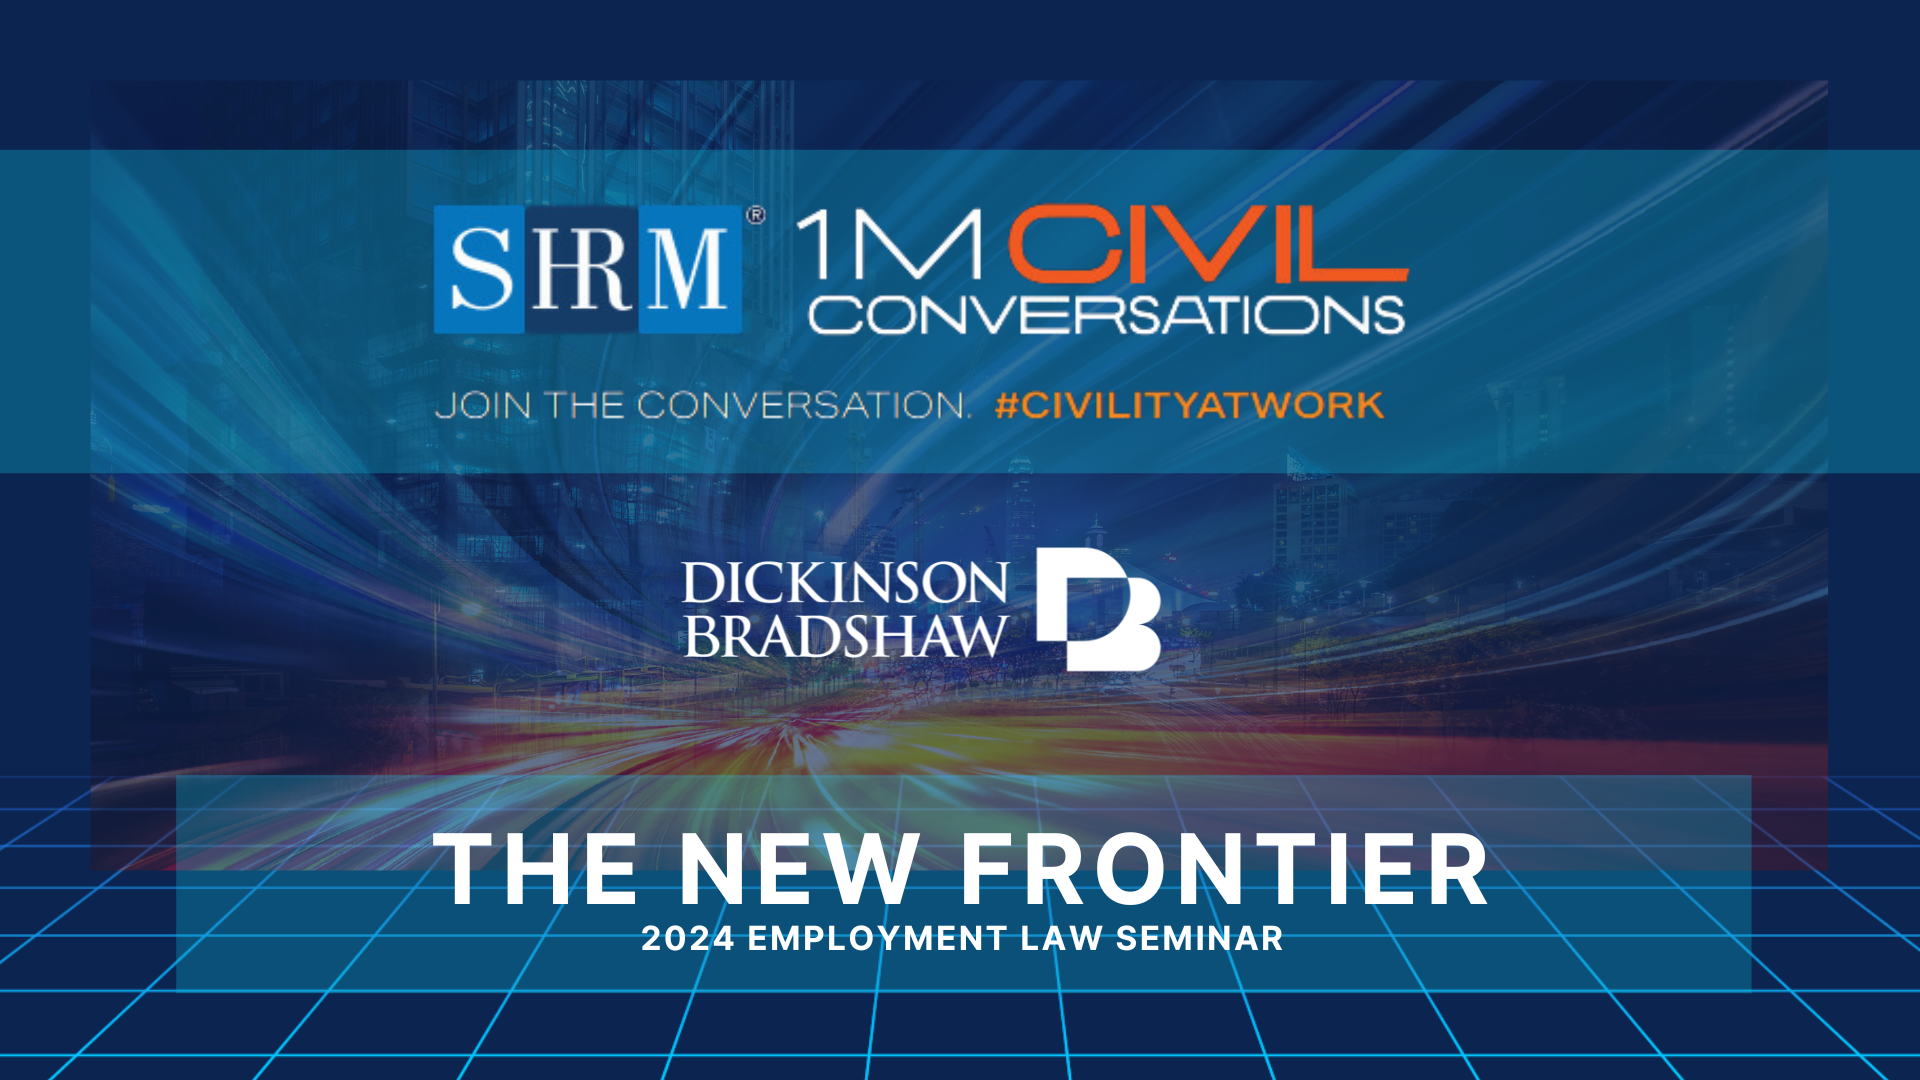 SHRM 1M Civil Conversations at the 2024 Employment Law Seminar